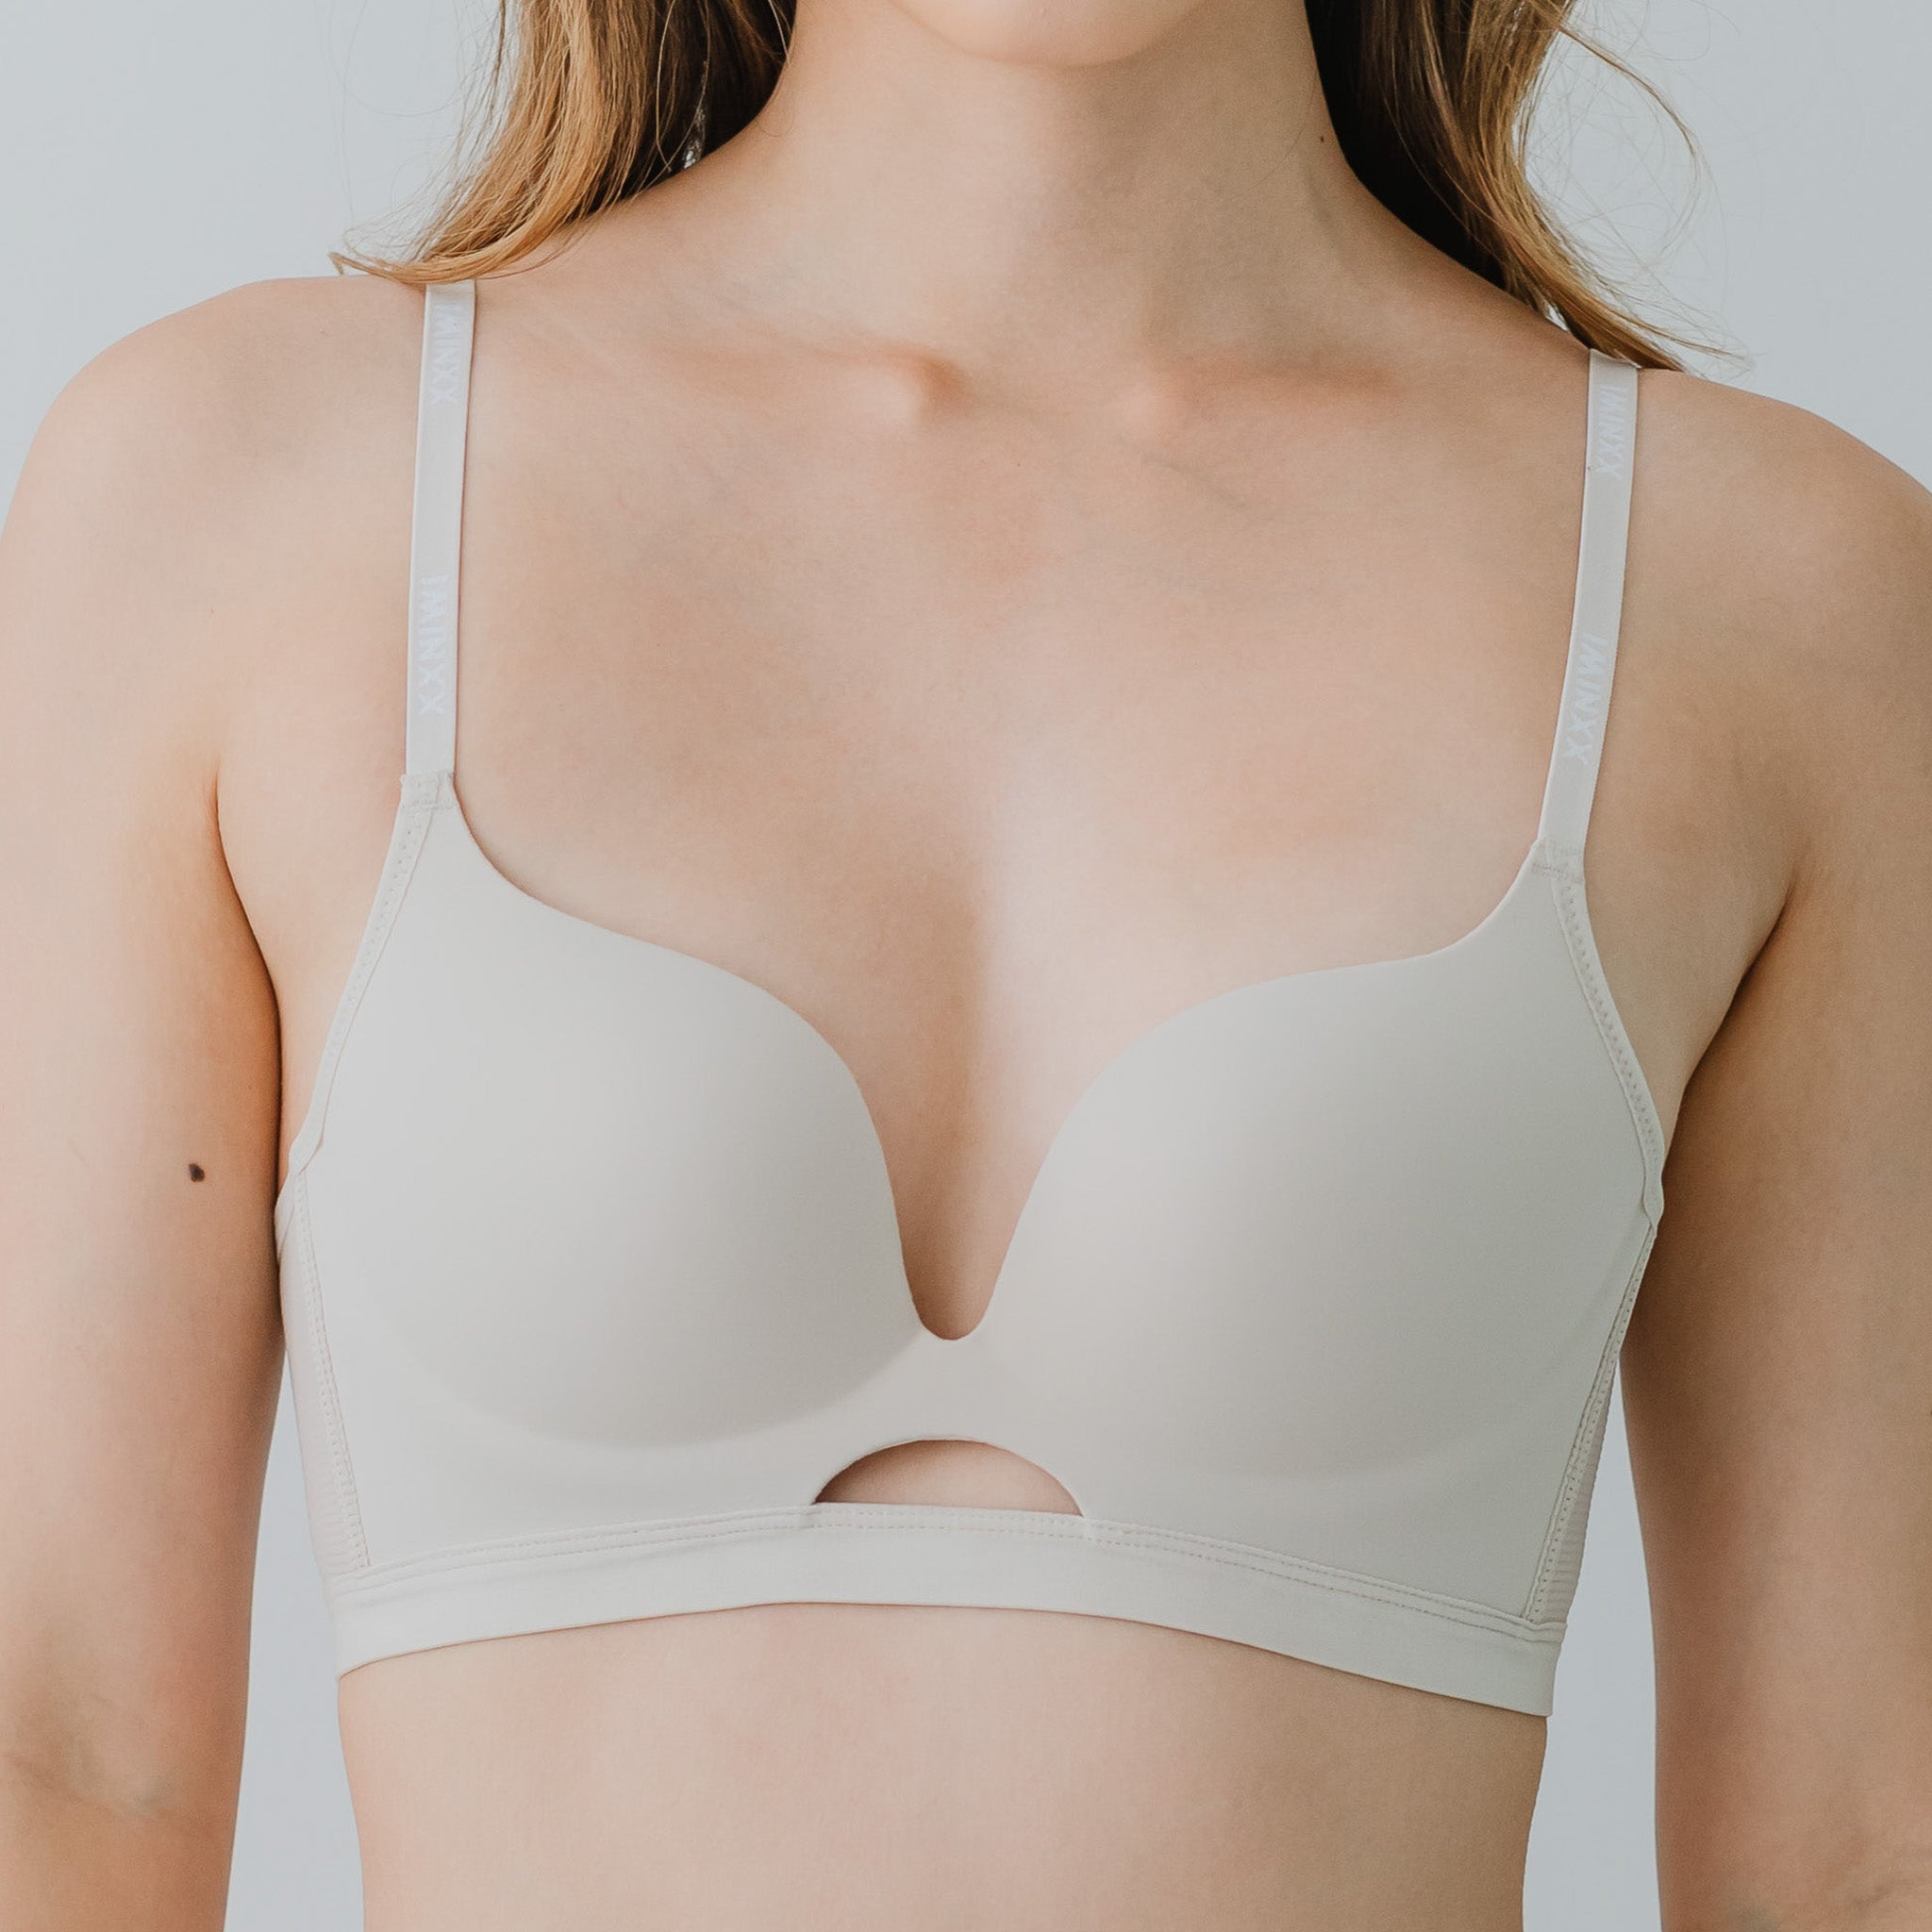 Soft mesh bra - White - Ladies